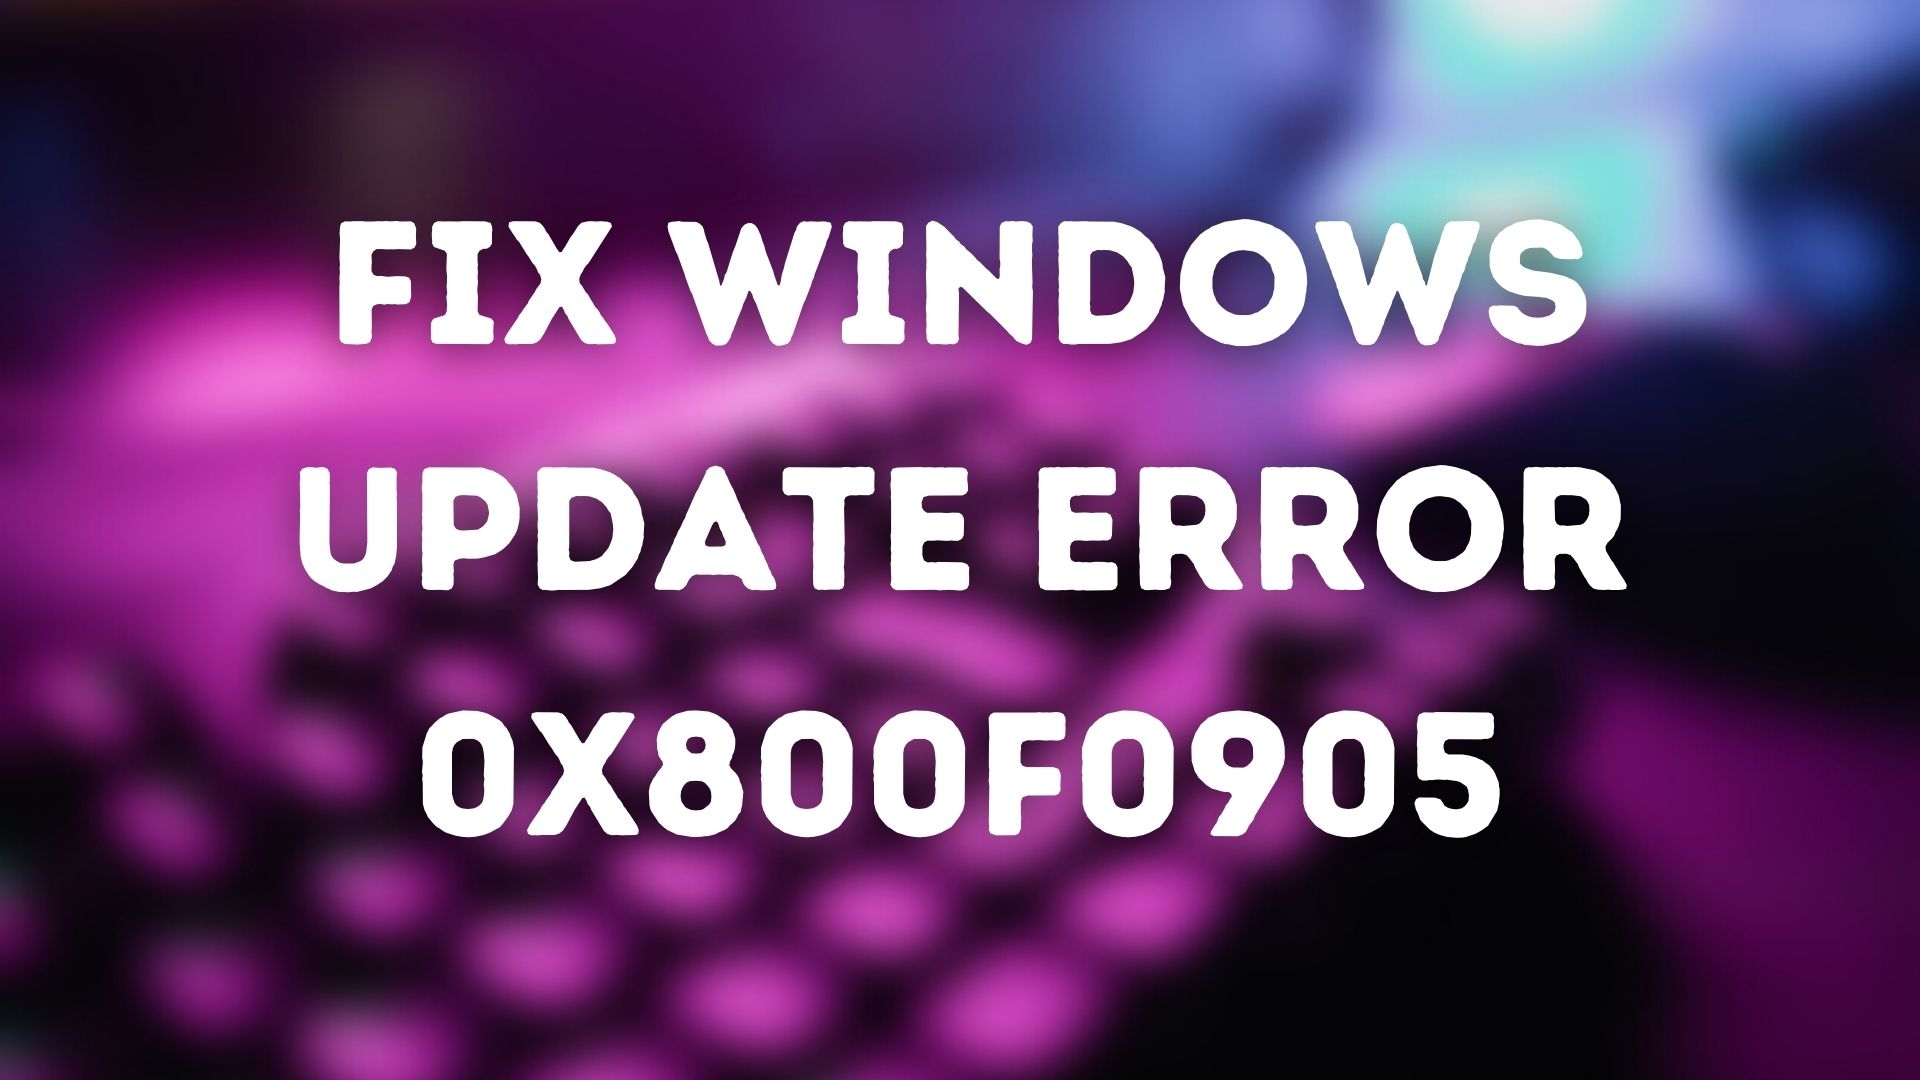 Fix Windows Update Error 0x800f0905 Fix-Windows-Update-Error-0x800f0905.jpg